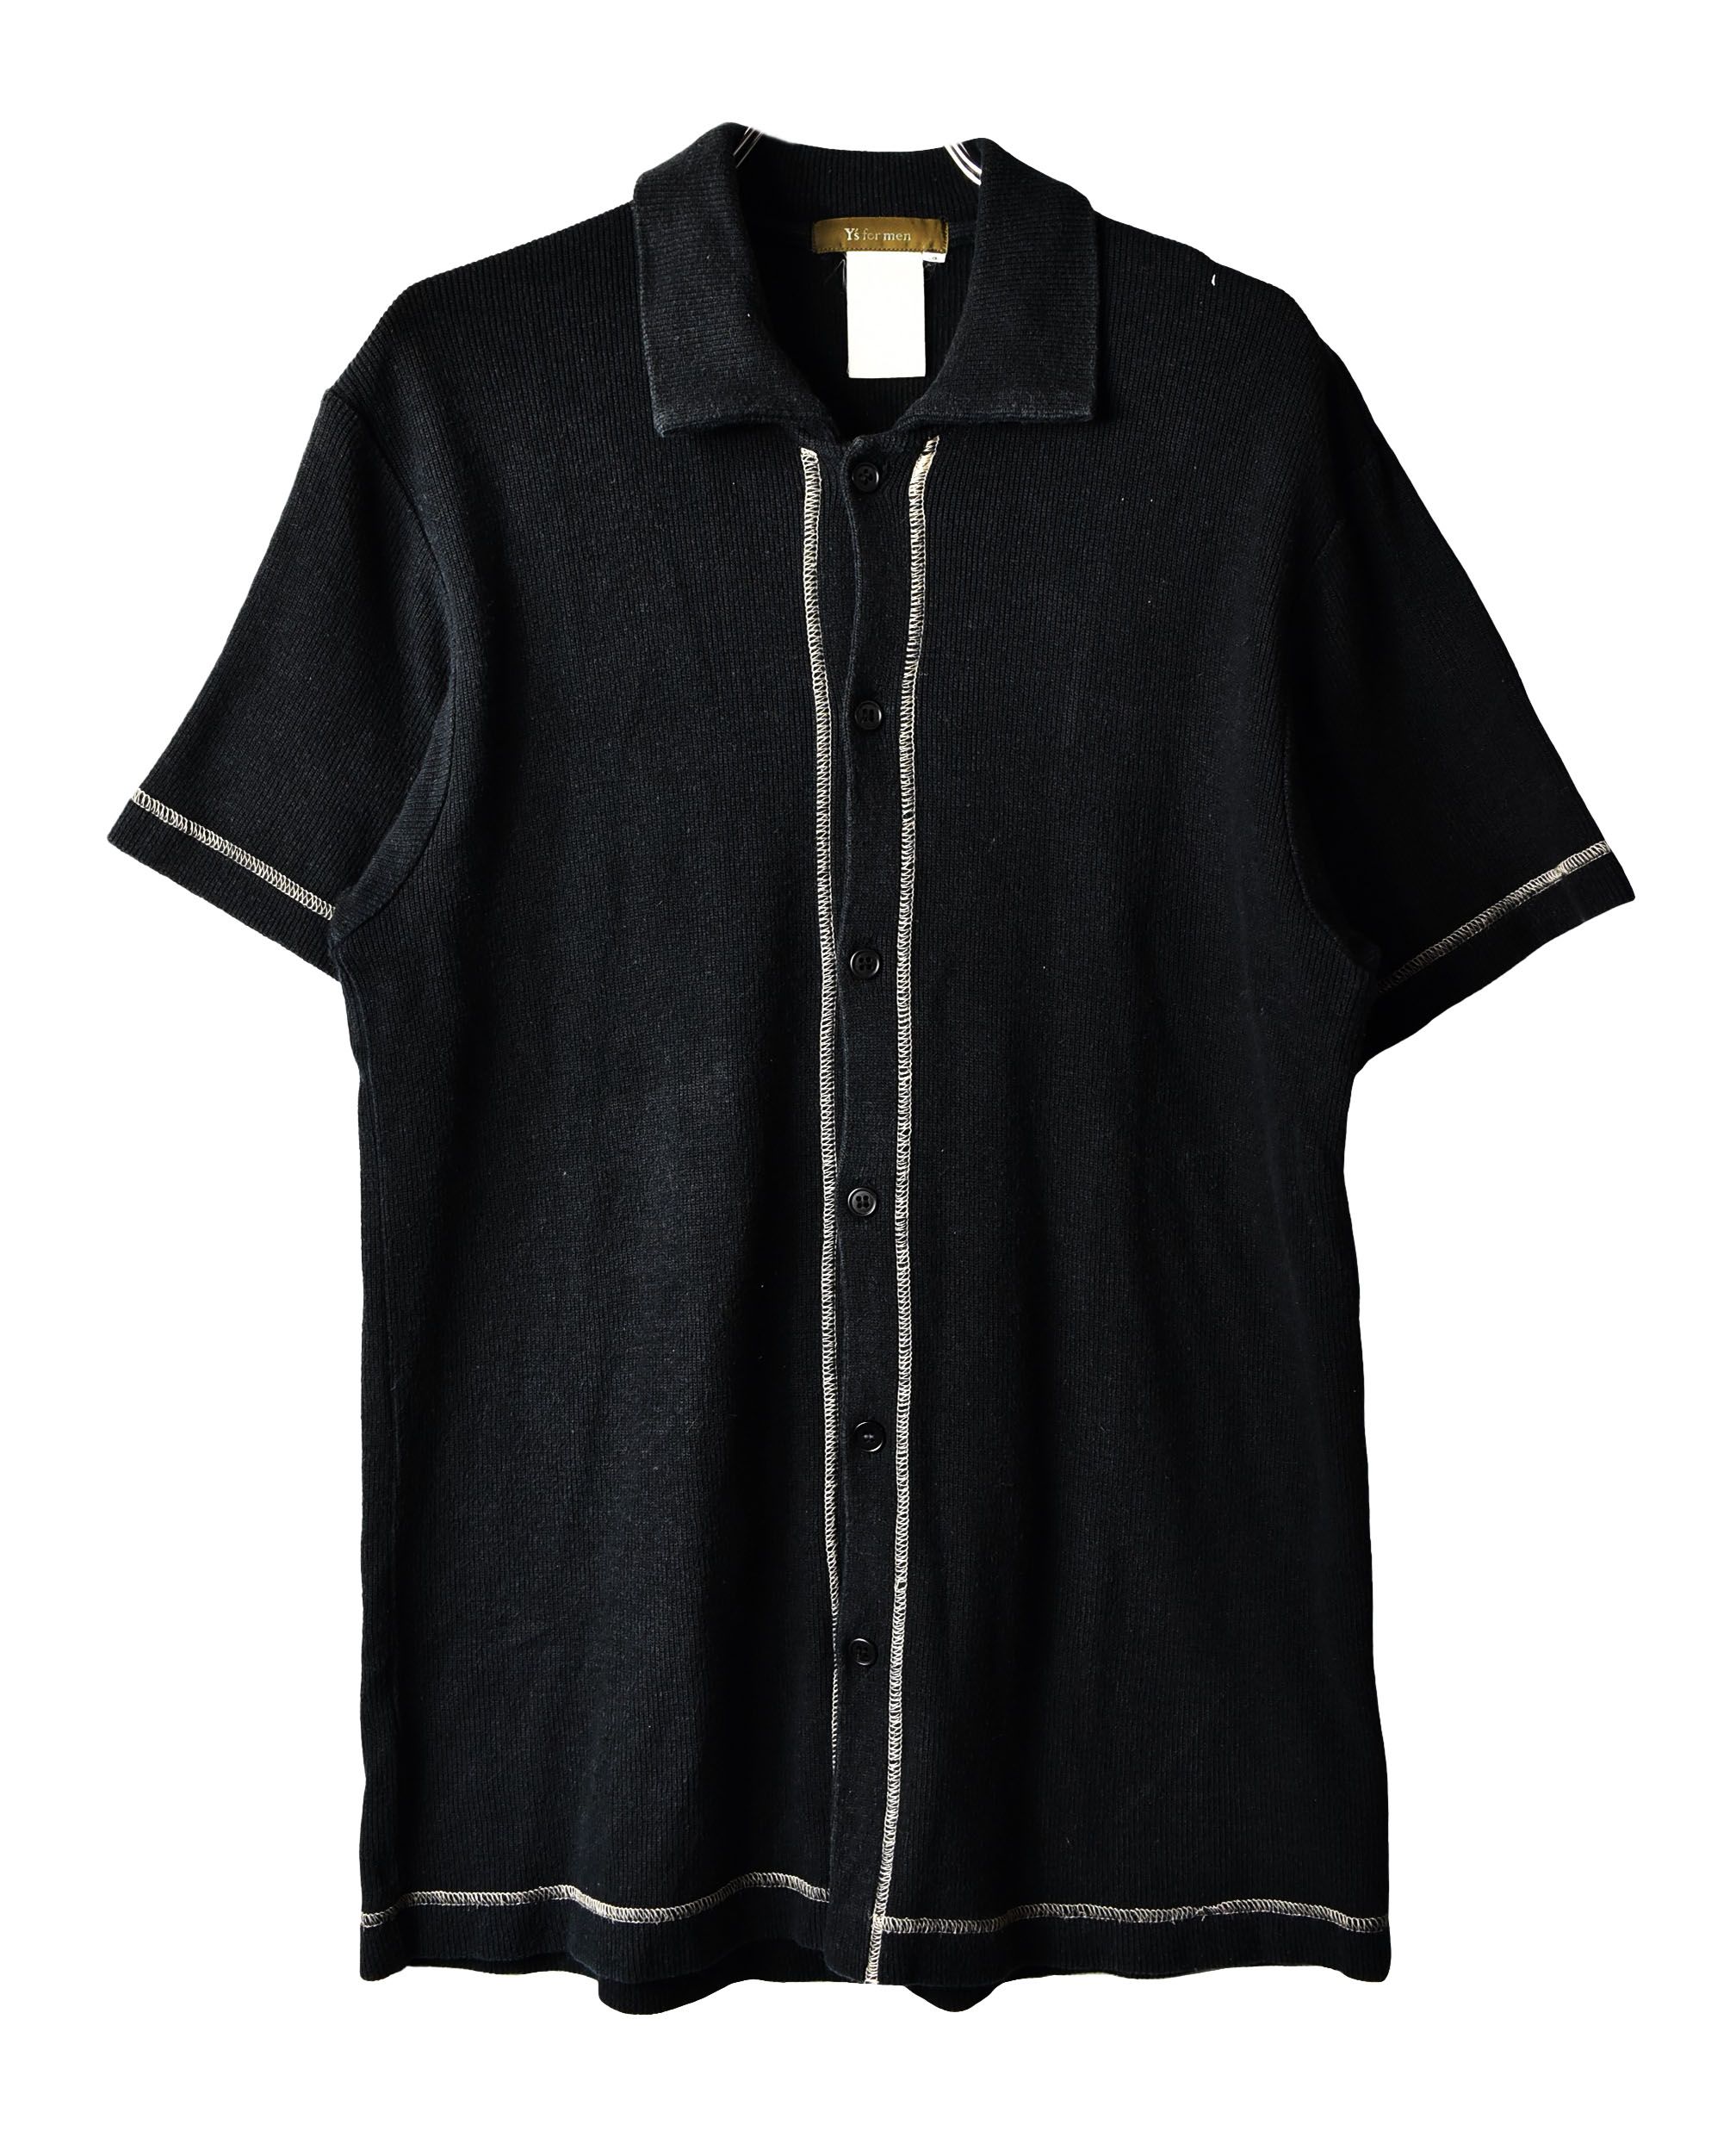 Pre-owned Yohji Yamamoto /line Design Polo Shirt/12337 - 0302 47.5 In Black